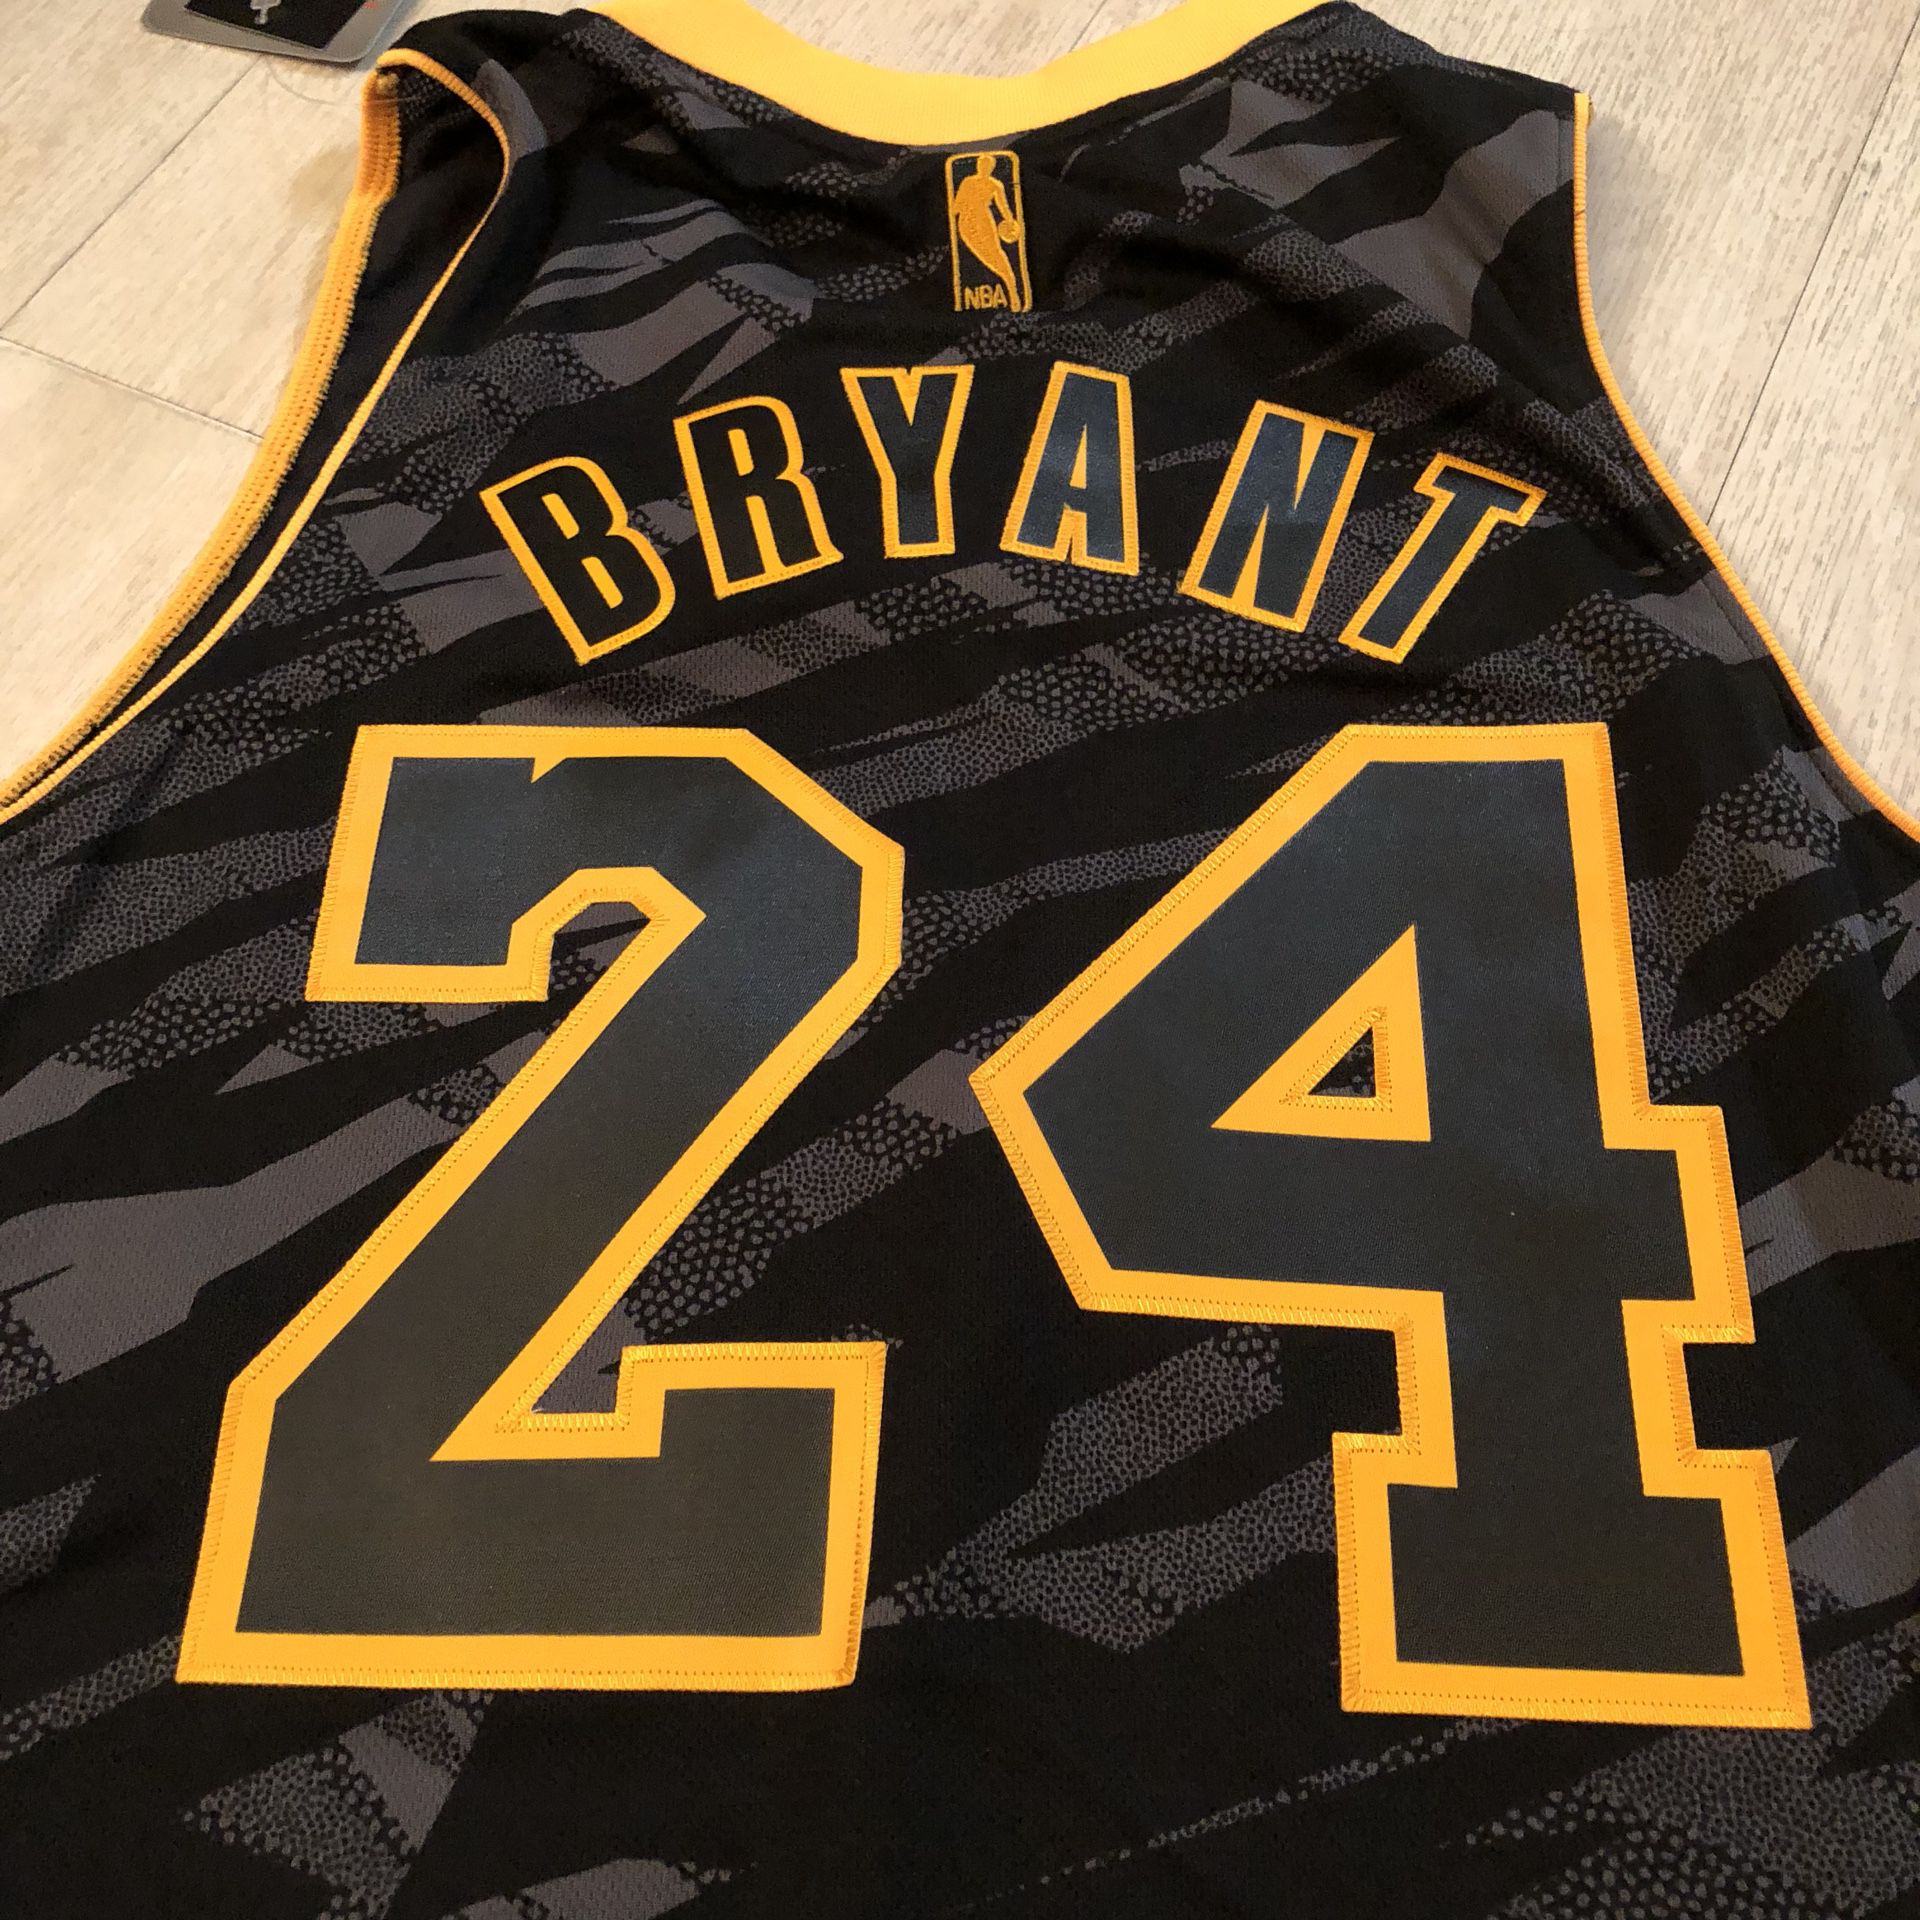 adidas Kobe Bryant Lakers Jersey Men Yellow A45978 - KICKS CREW